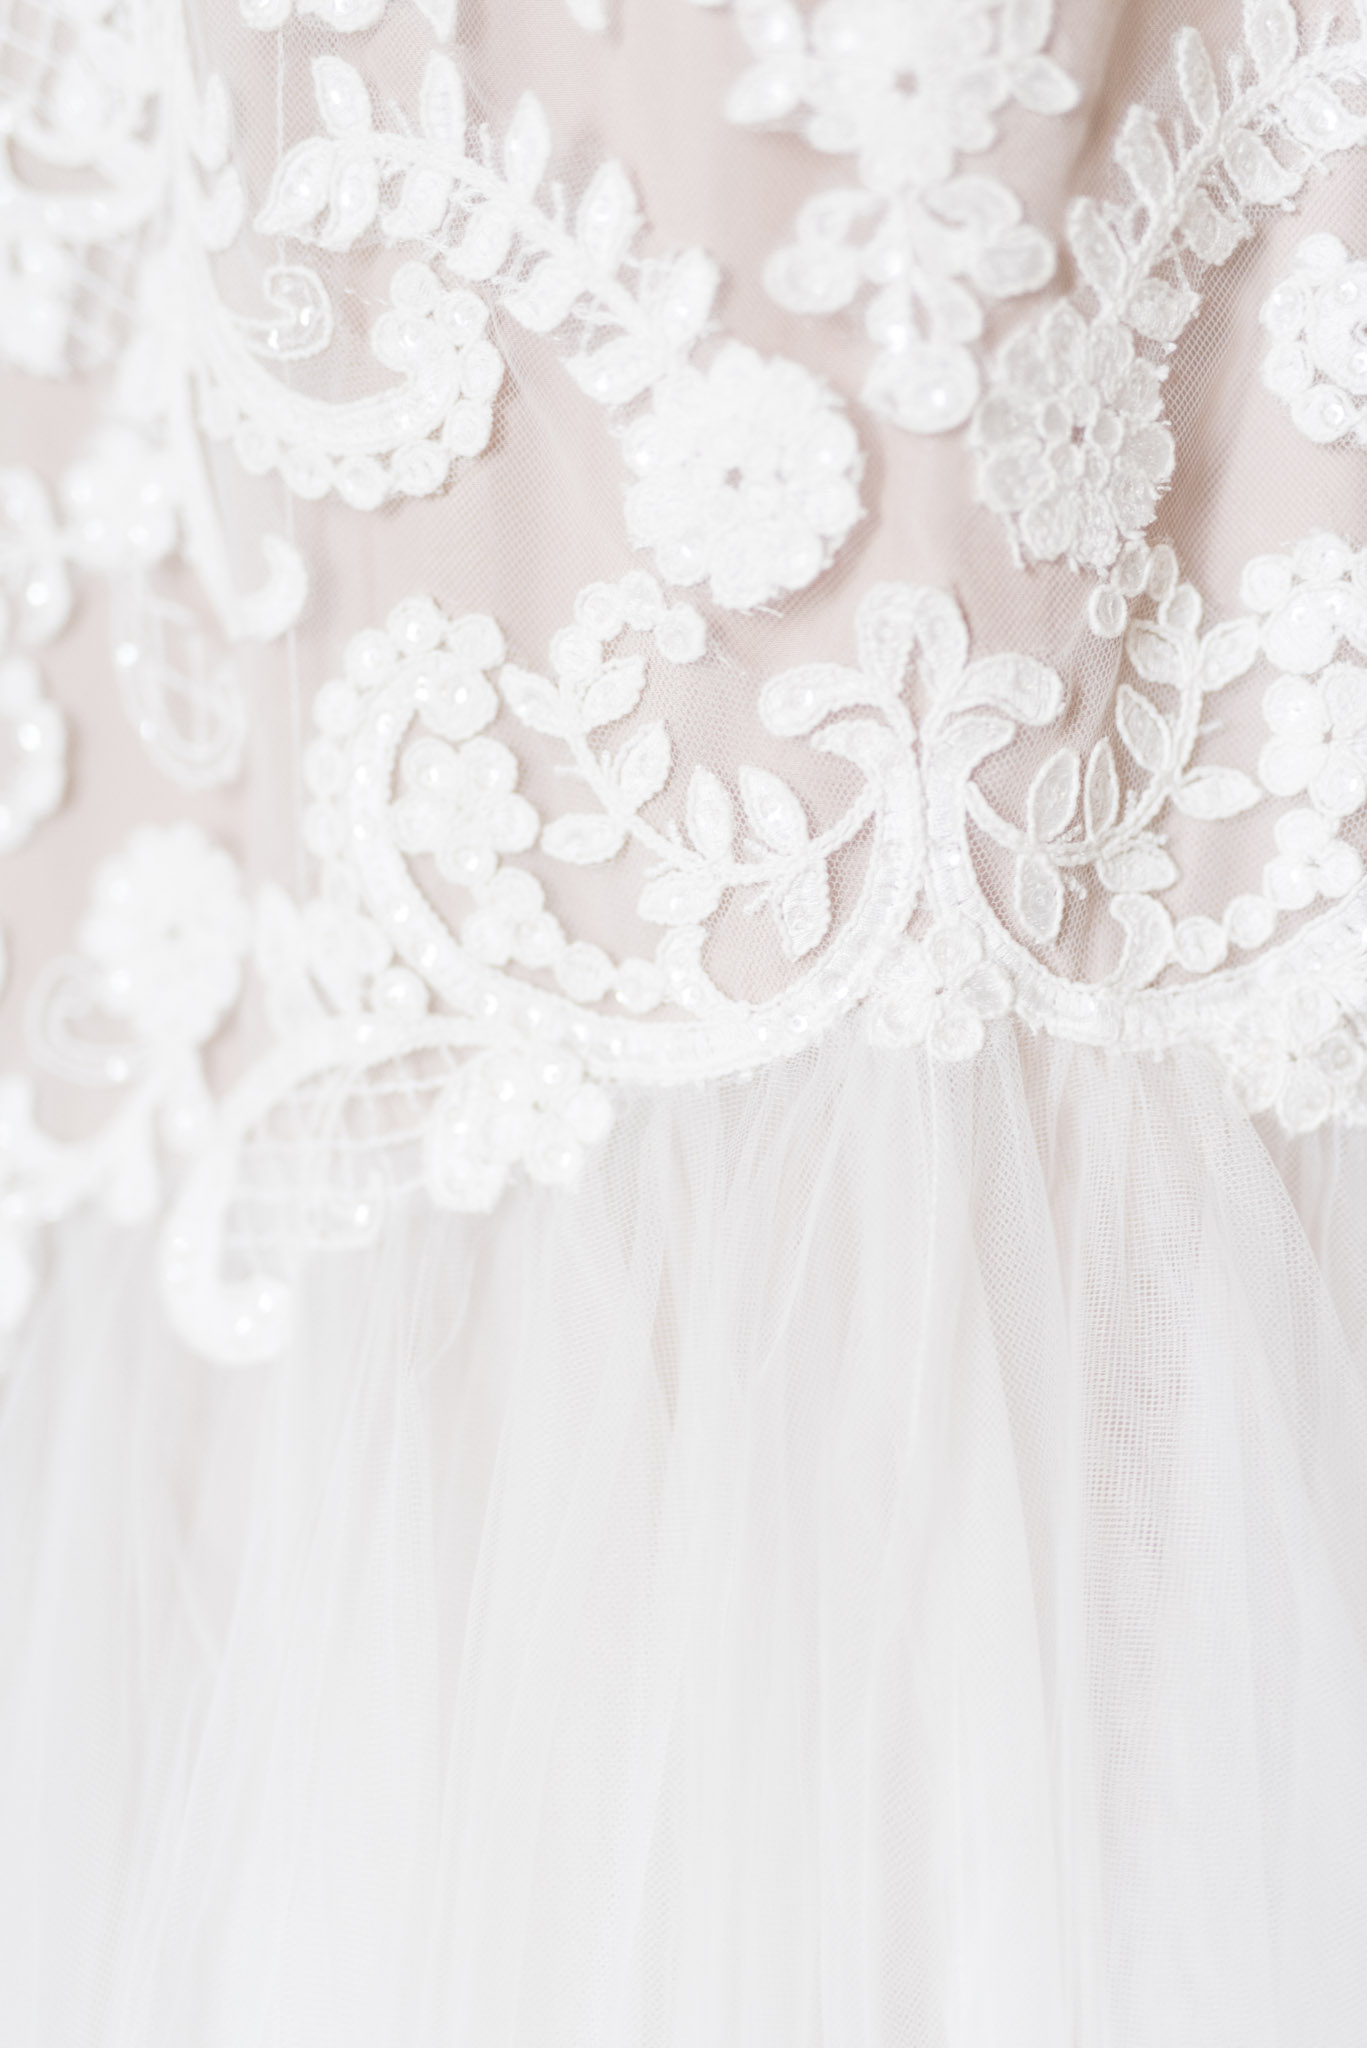 Wedding dress lace.